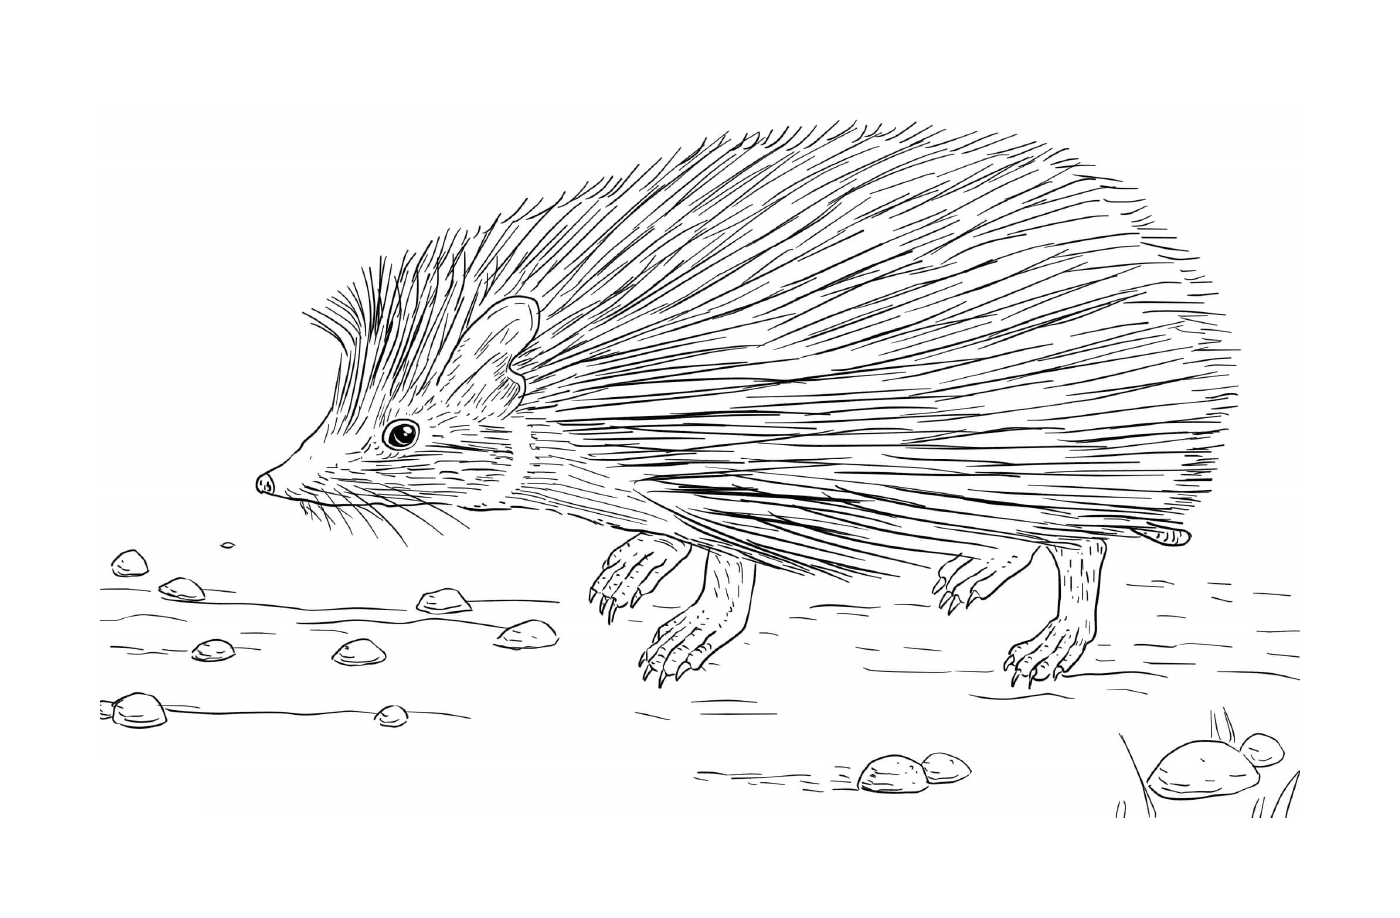  Hedgehog in natura 